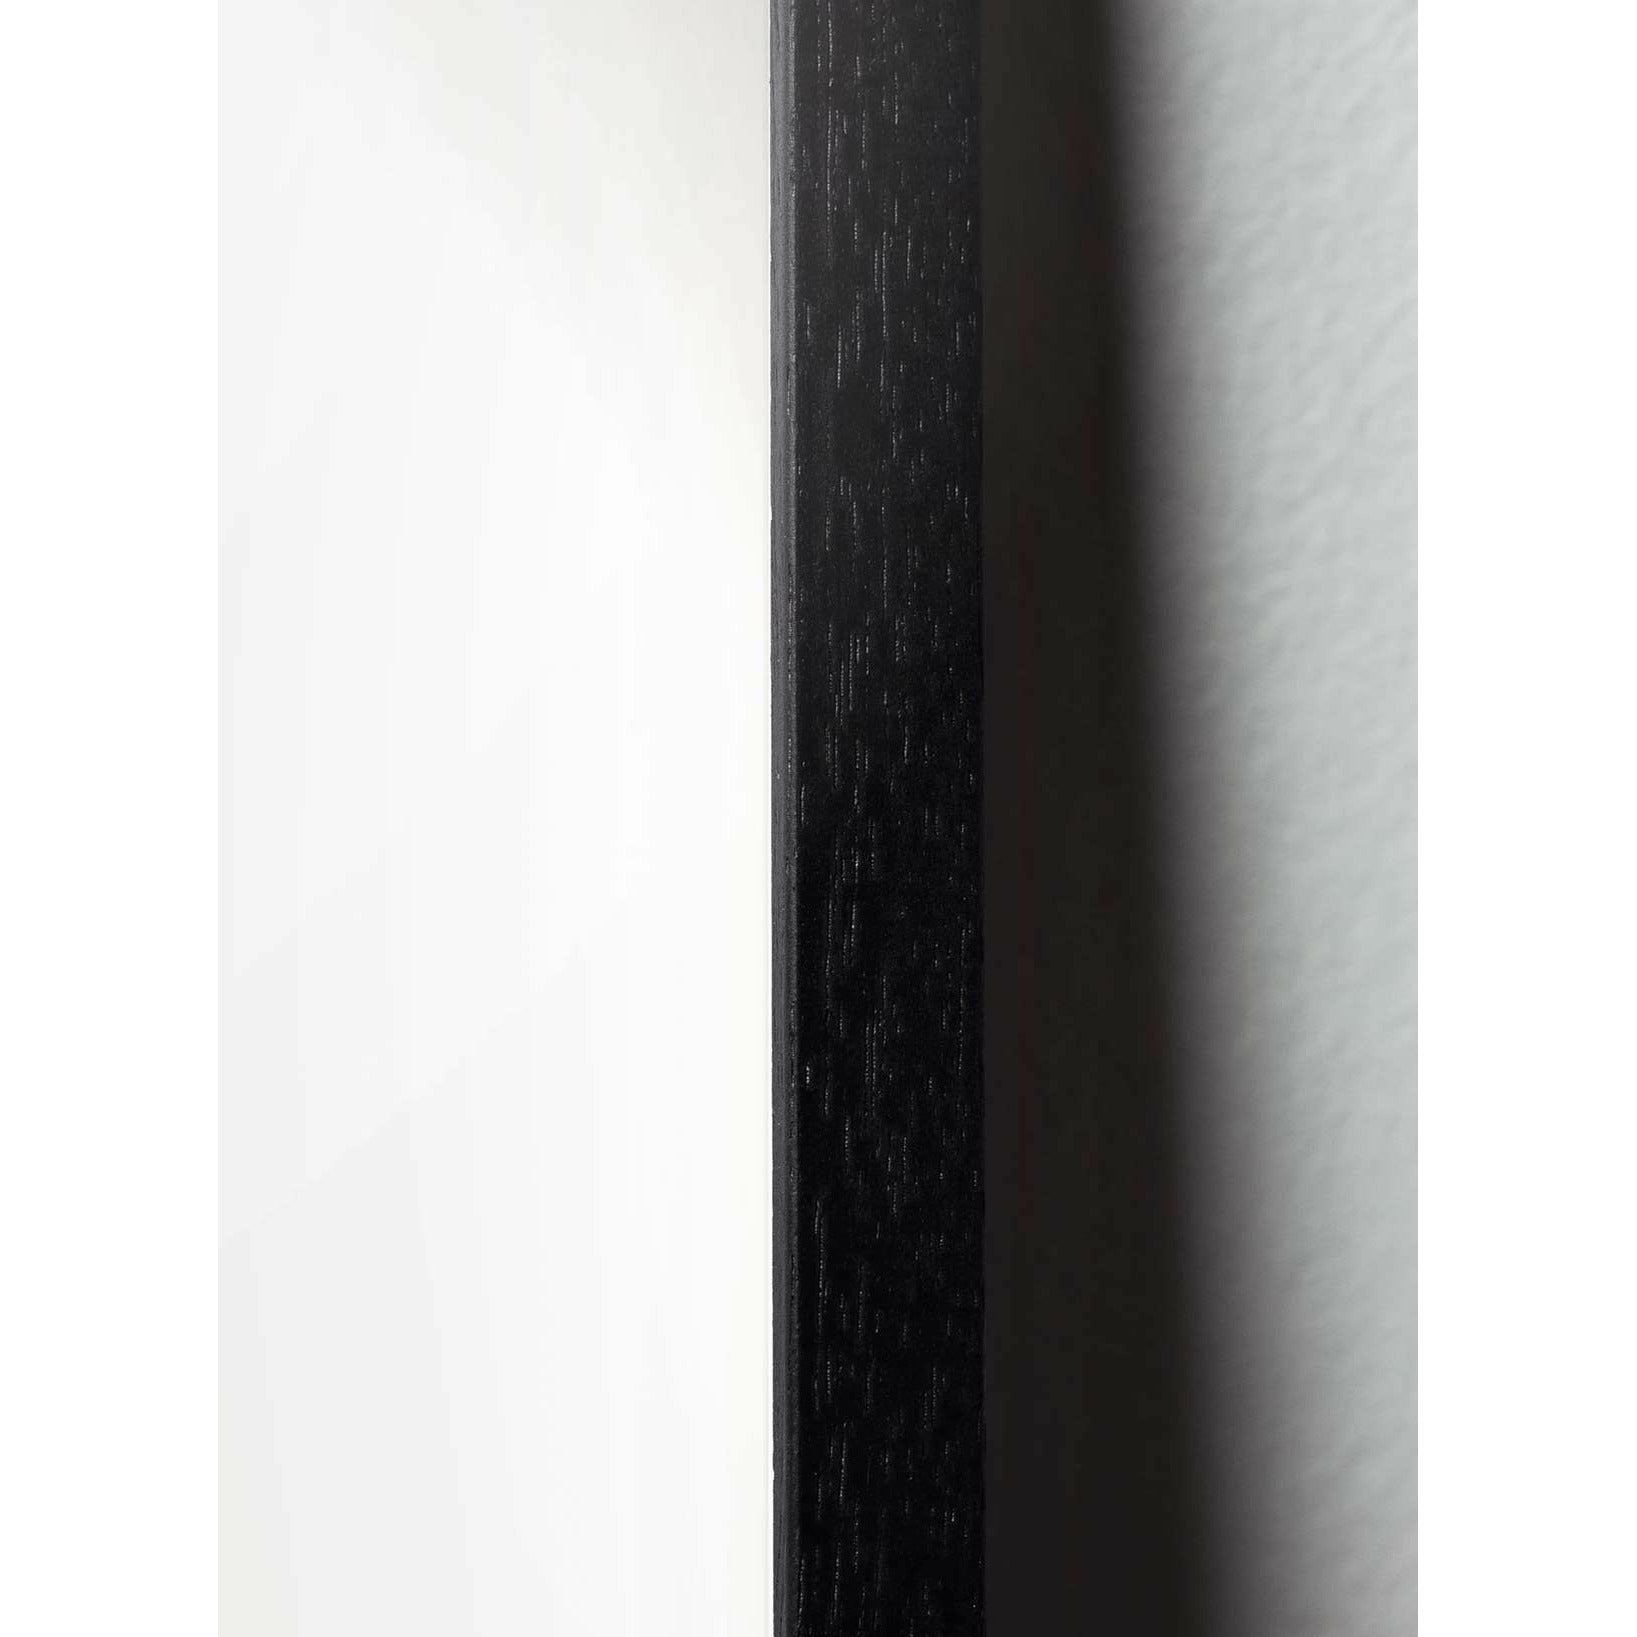 Póster de clip de papel cisne de creación, marco en madera lacada negra de 70x100 cm, fondo rosa